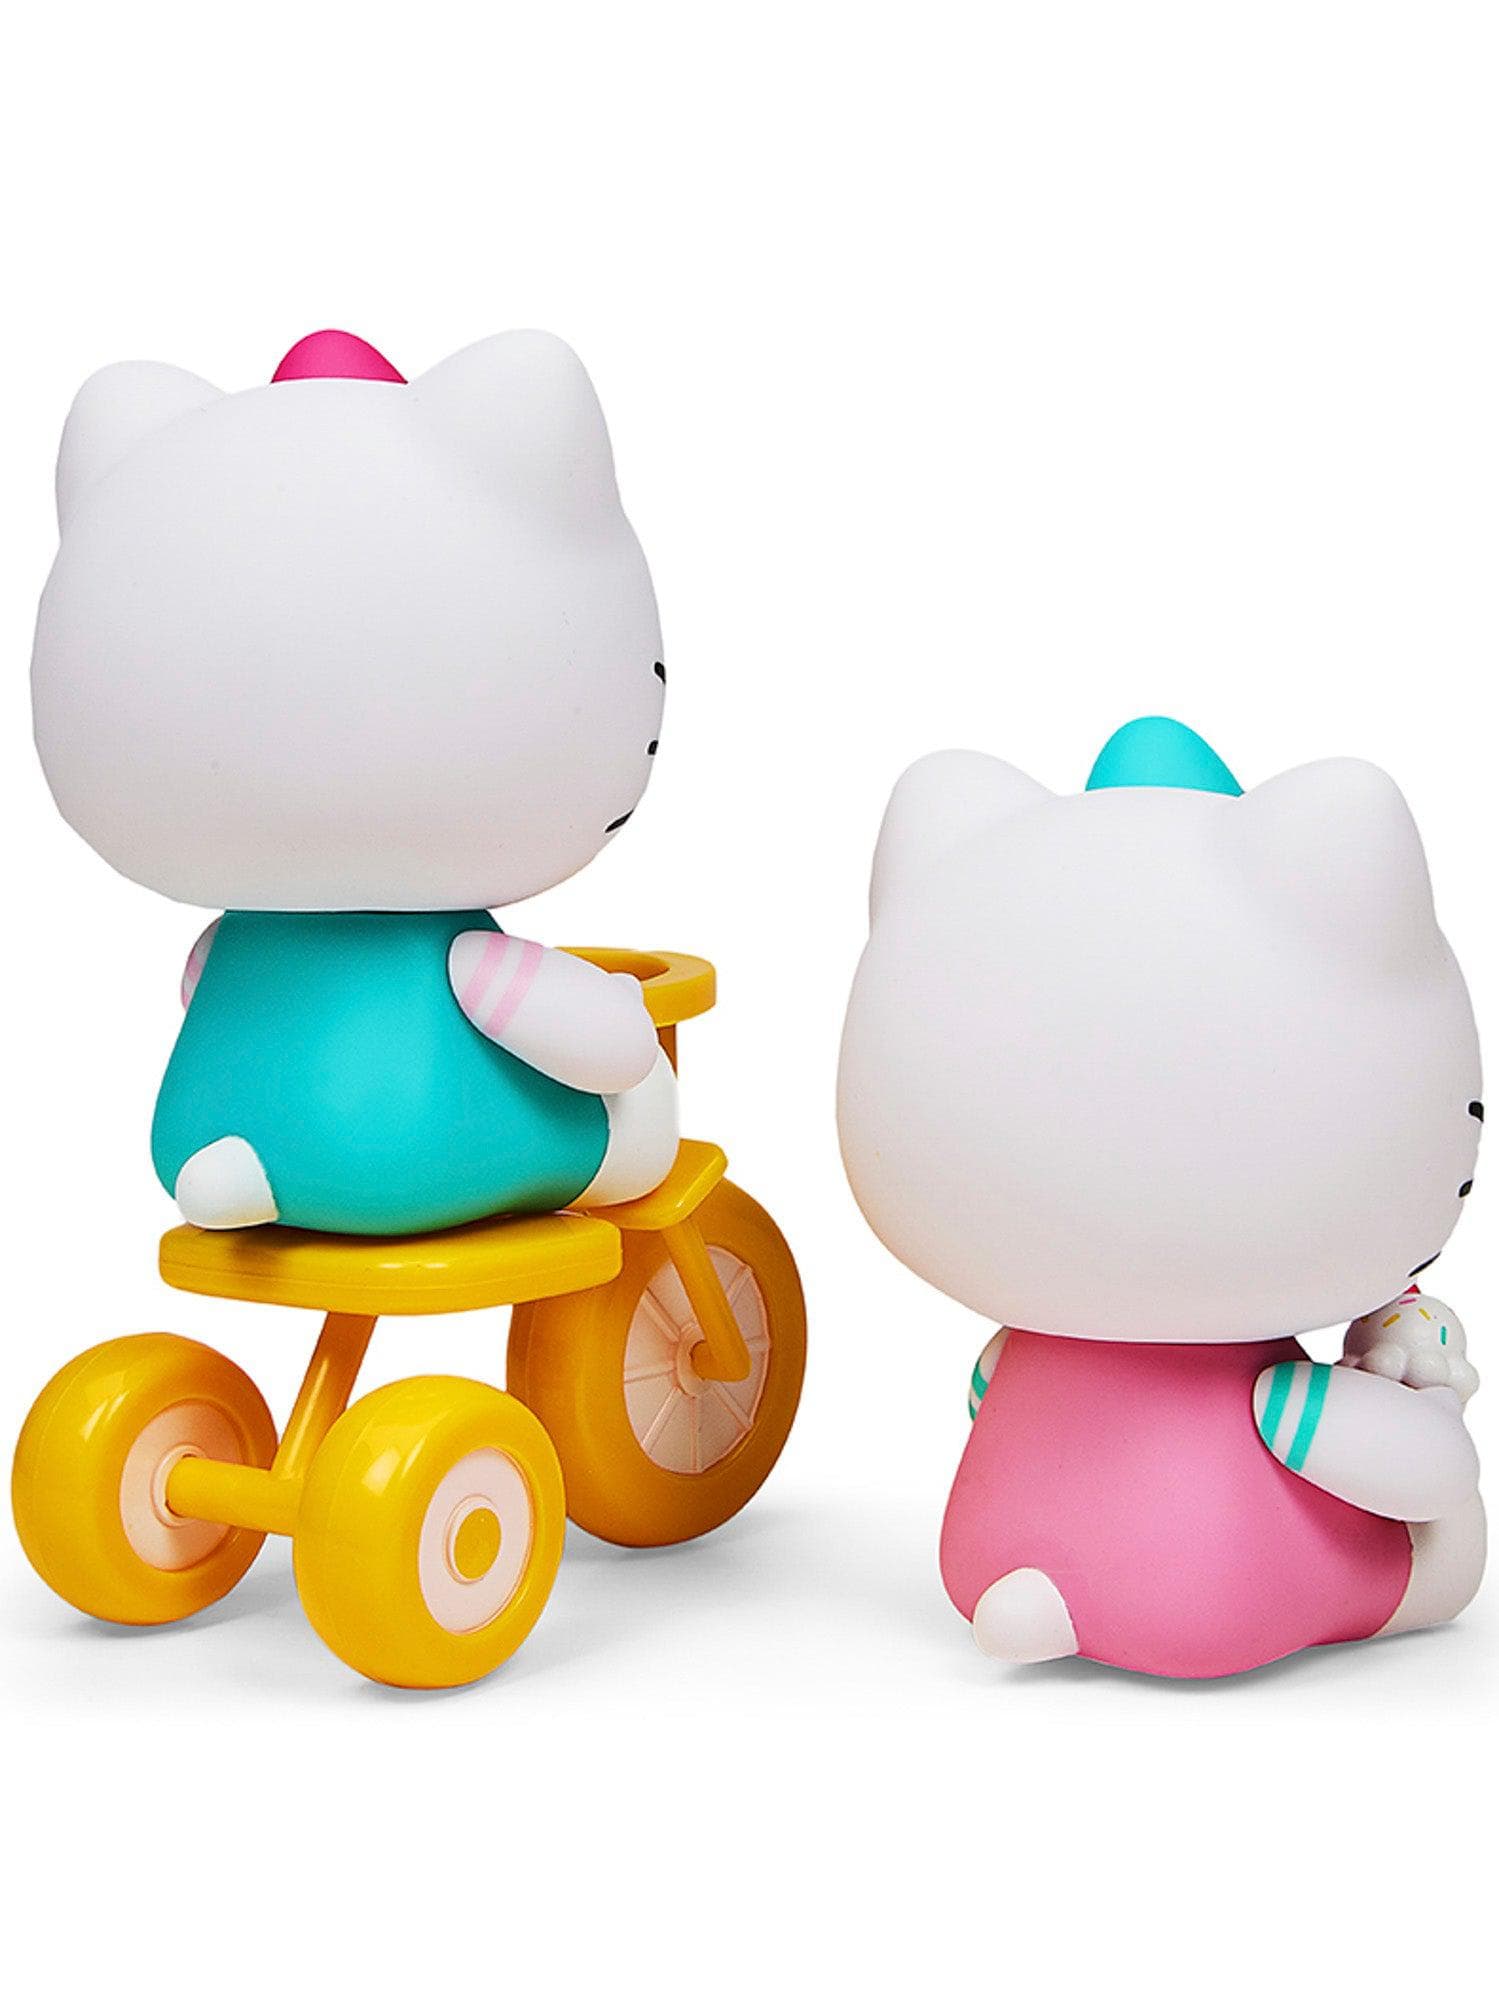 Kidrobot - Sanrio - 4.5” Vinyl Figures - Hello Kitty Play Theme 2 Pack “Tricycle and Ice-Cream” - costumes.com